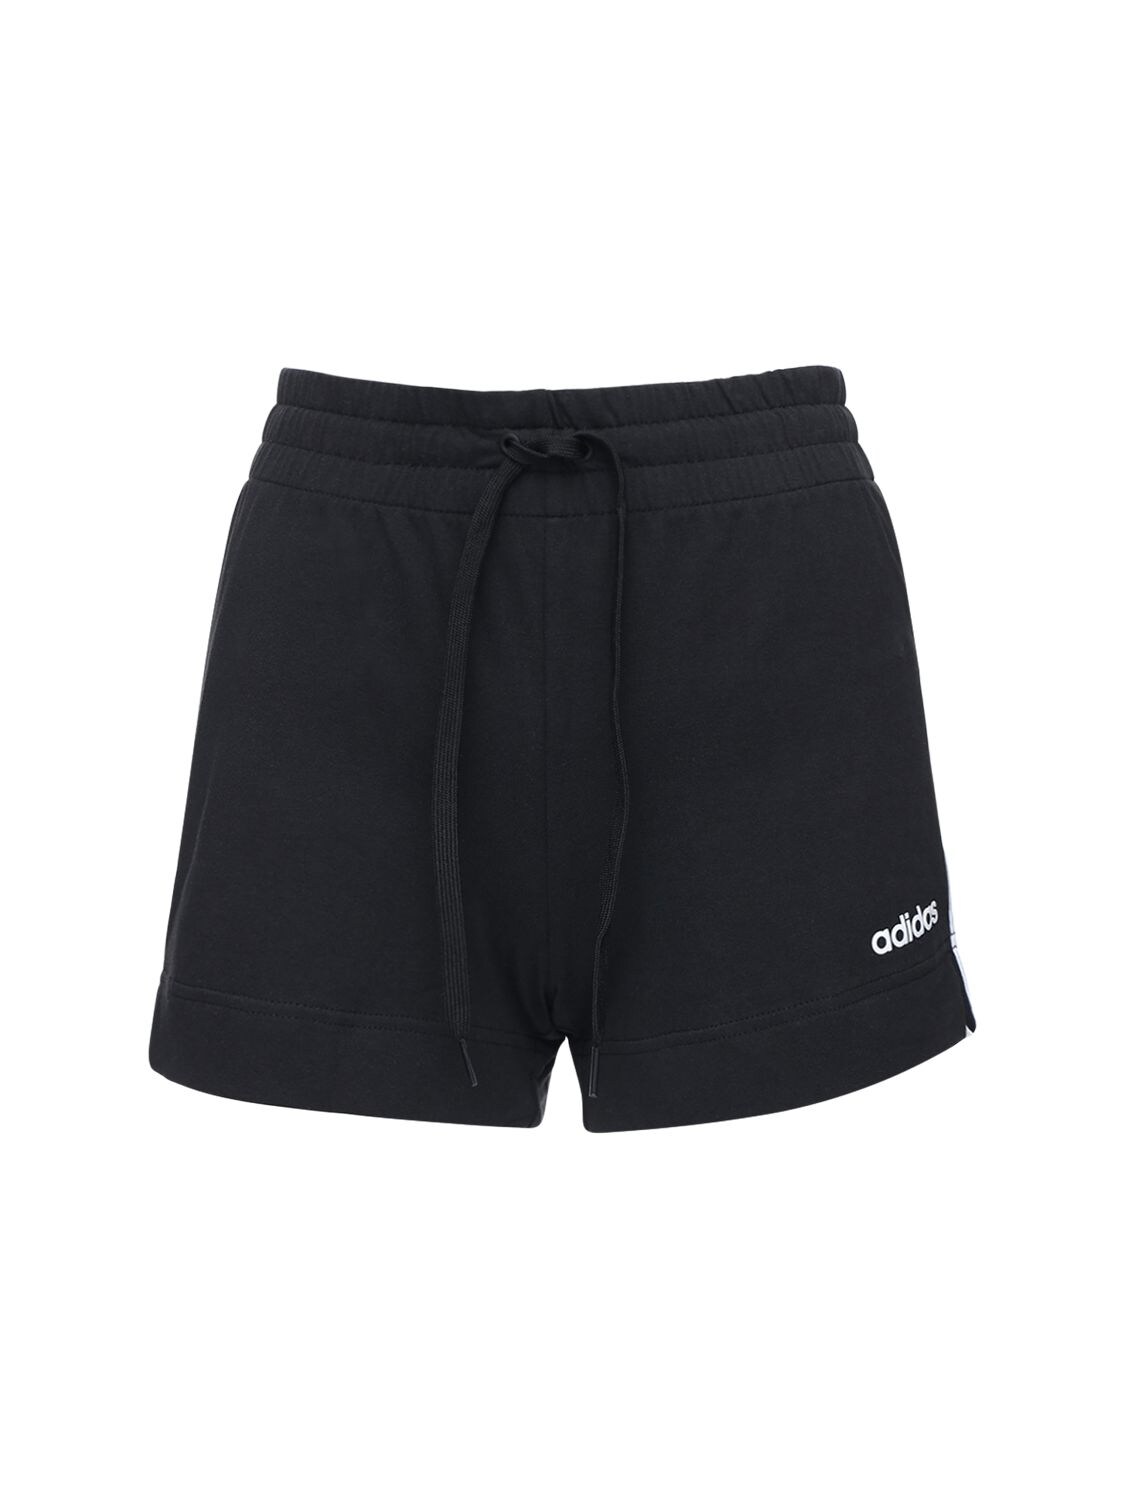 Adidas Originals Essential 3s Stretch Cotton Sweat Shorts In Black